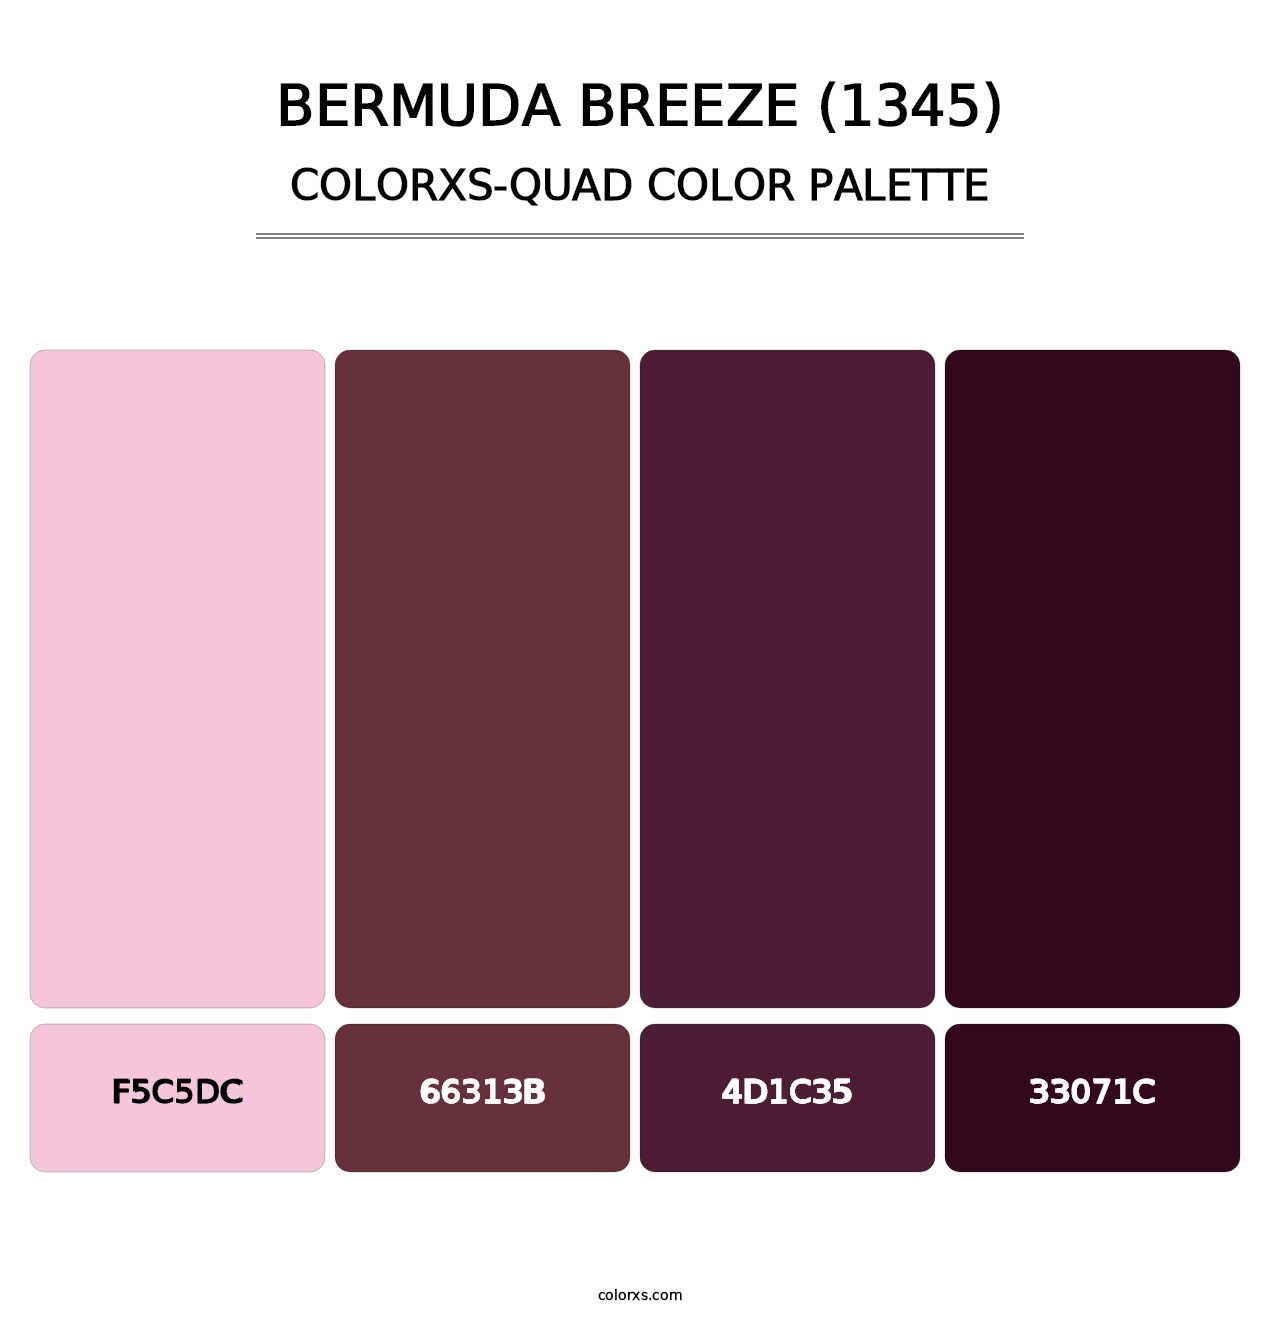 Bermuda Breeze (1345) - Colorxs Quad Palette